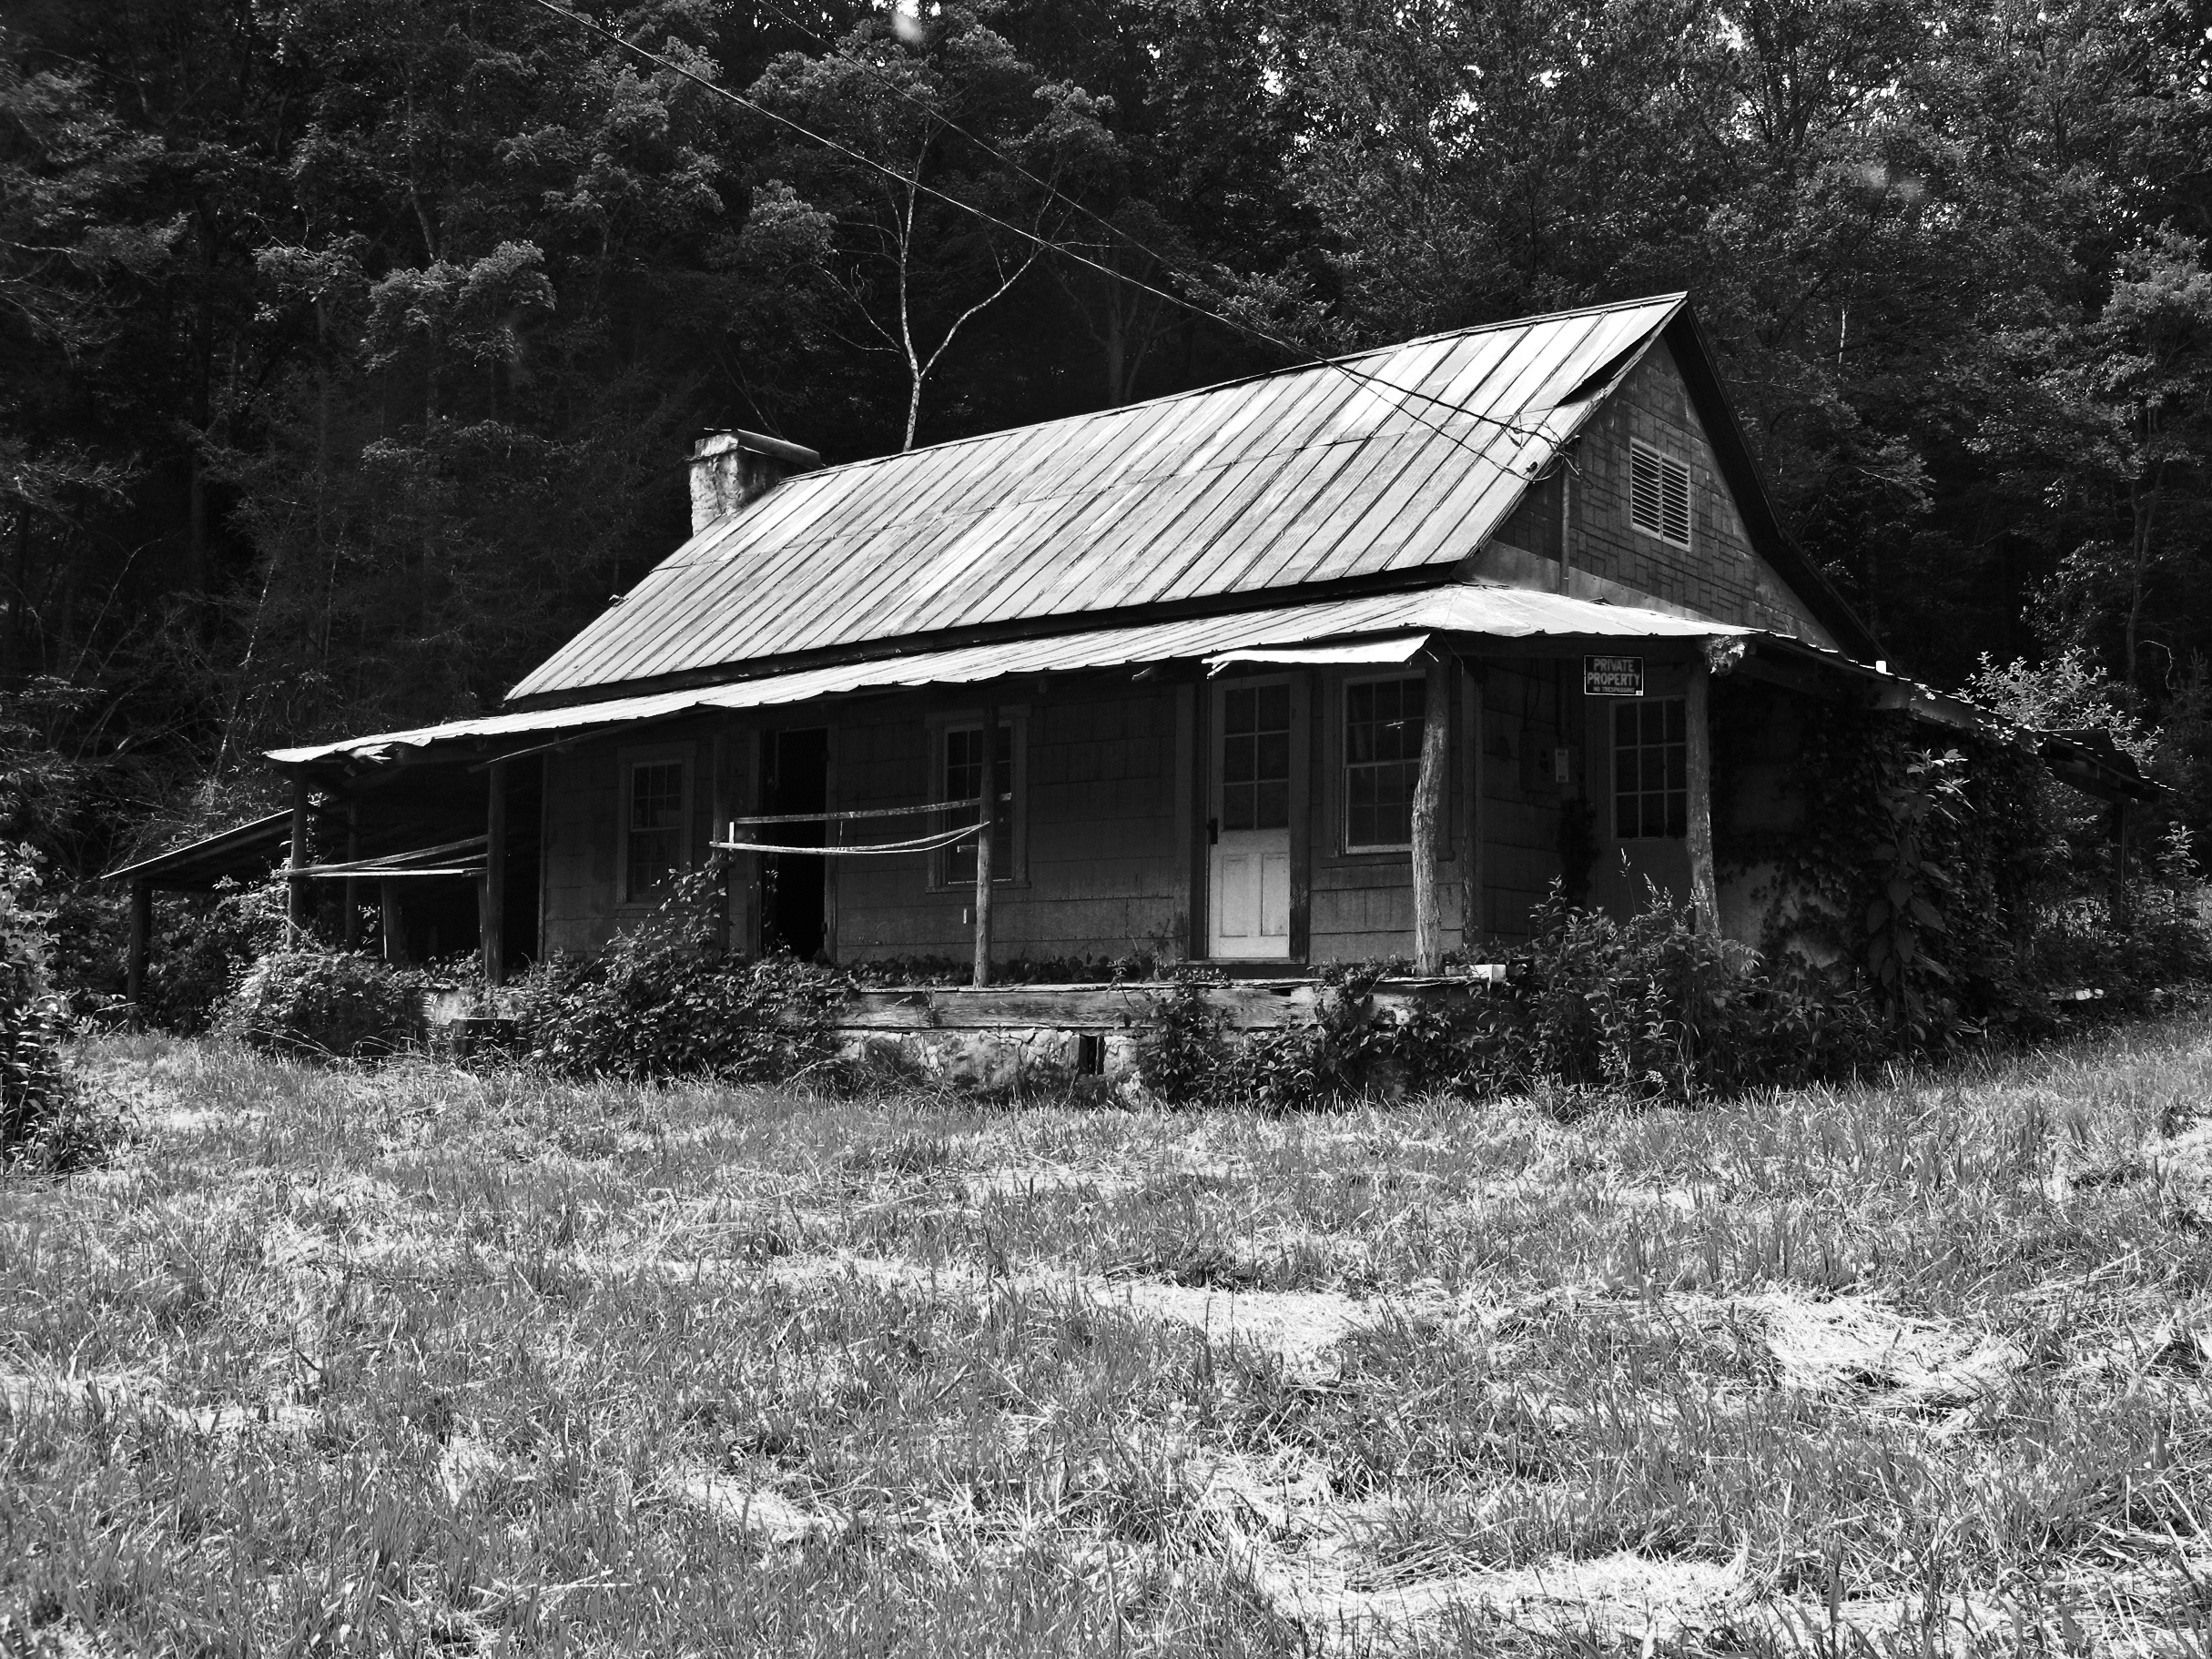    Gnat House  , Fannin County, GA, 2013. B&amp;W HDR digital image. 